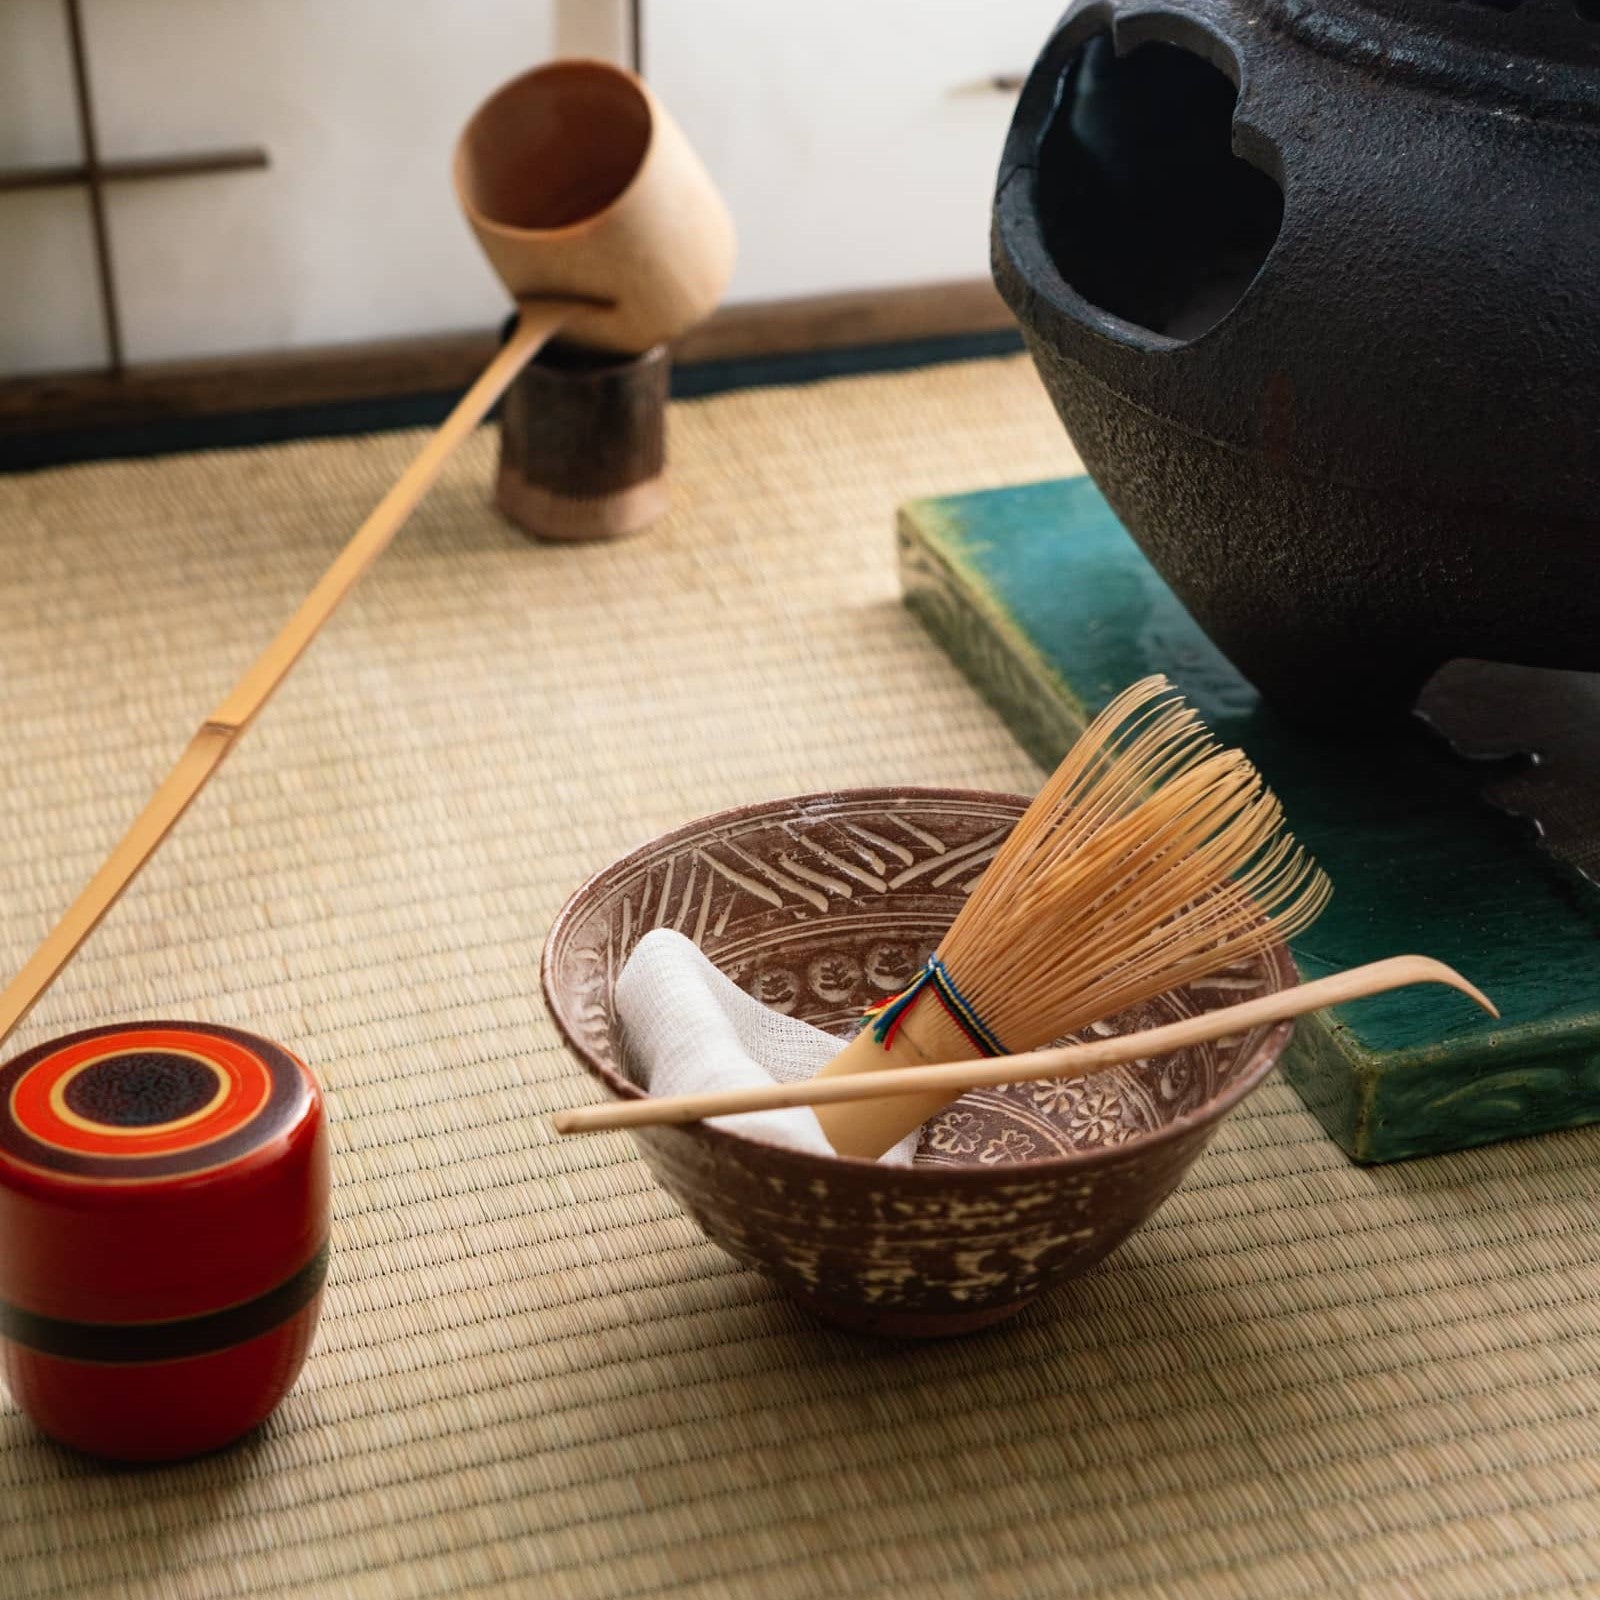 japanese tea ceremony tools